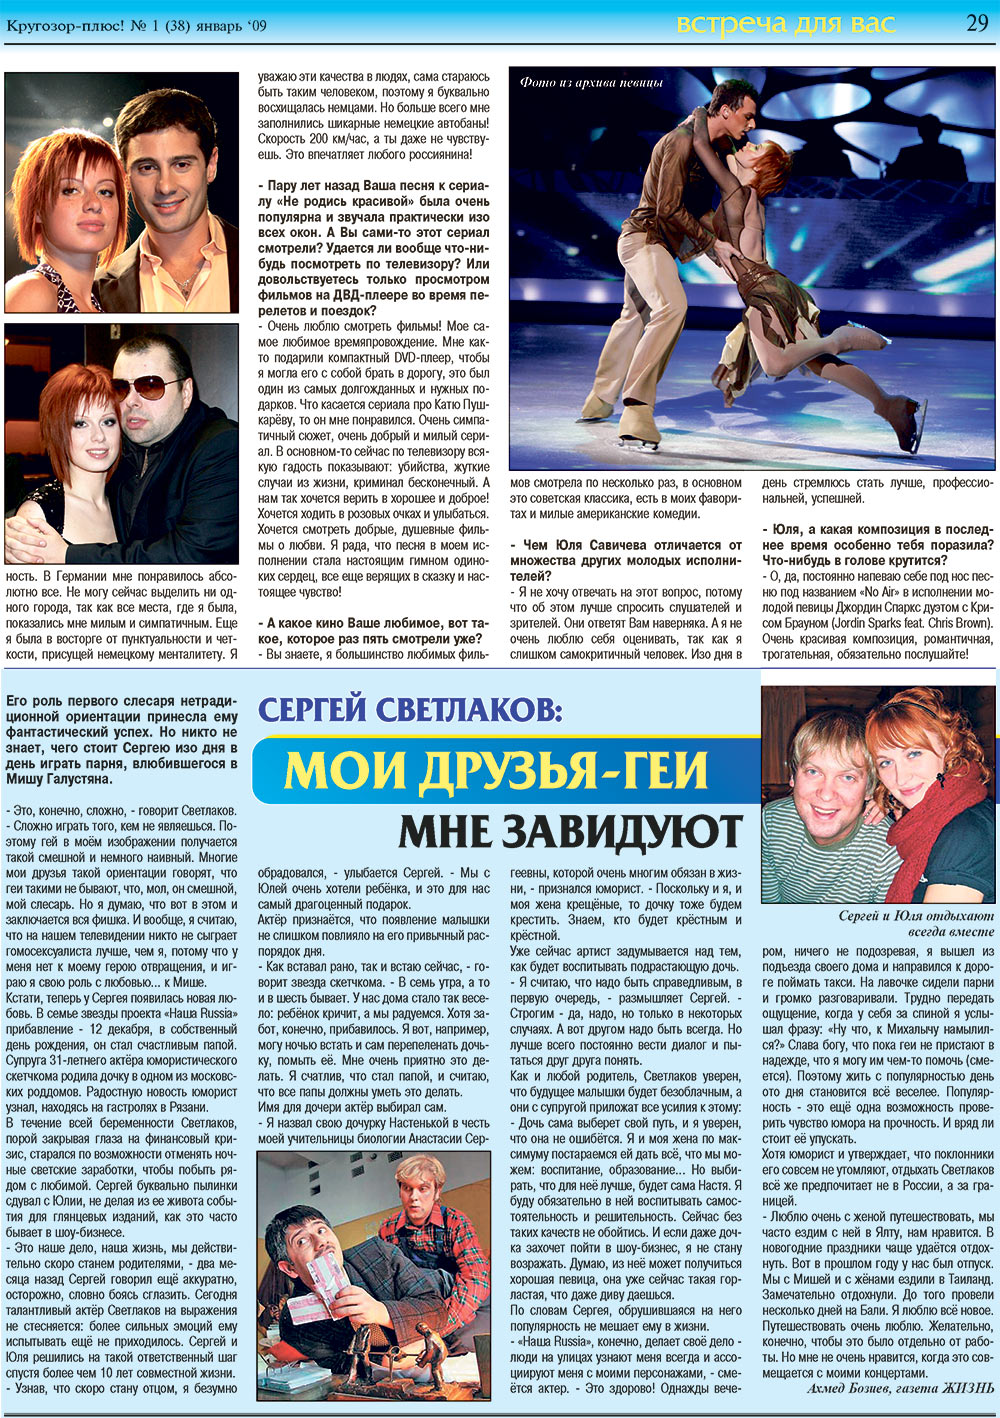 Кругозор плюс! (газета). 2009 год, номер 1, стр. 29